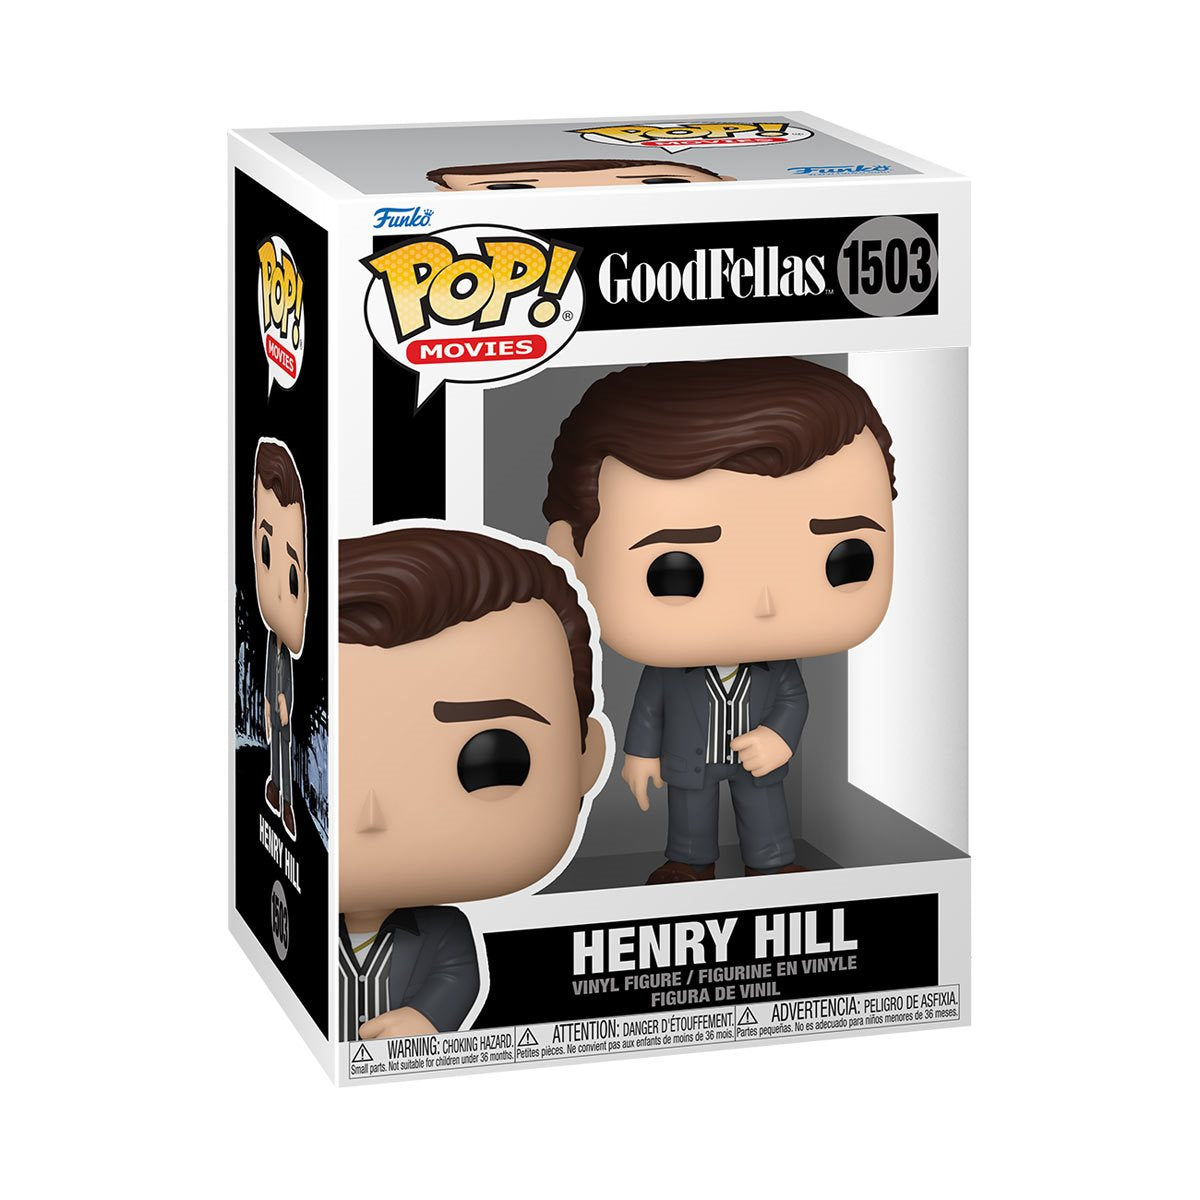 Pop! Movies 1503 GoodFellas: Henry Hill